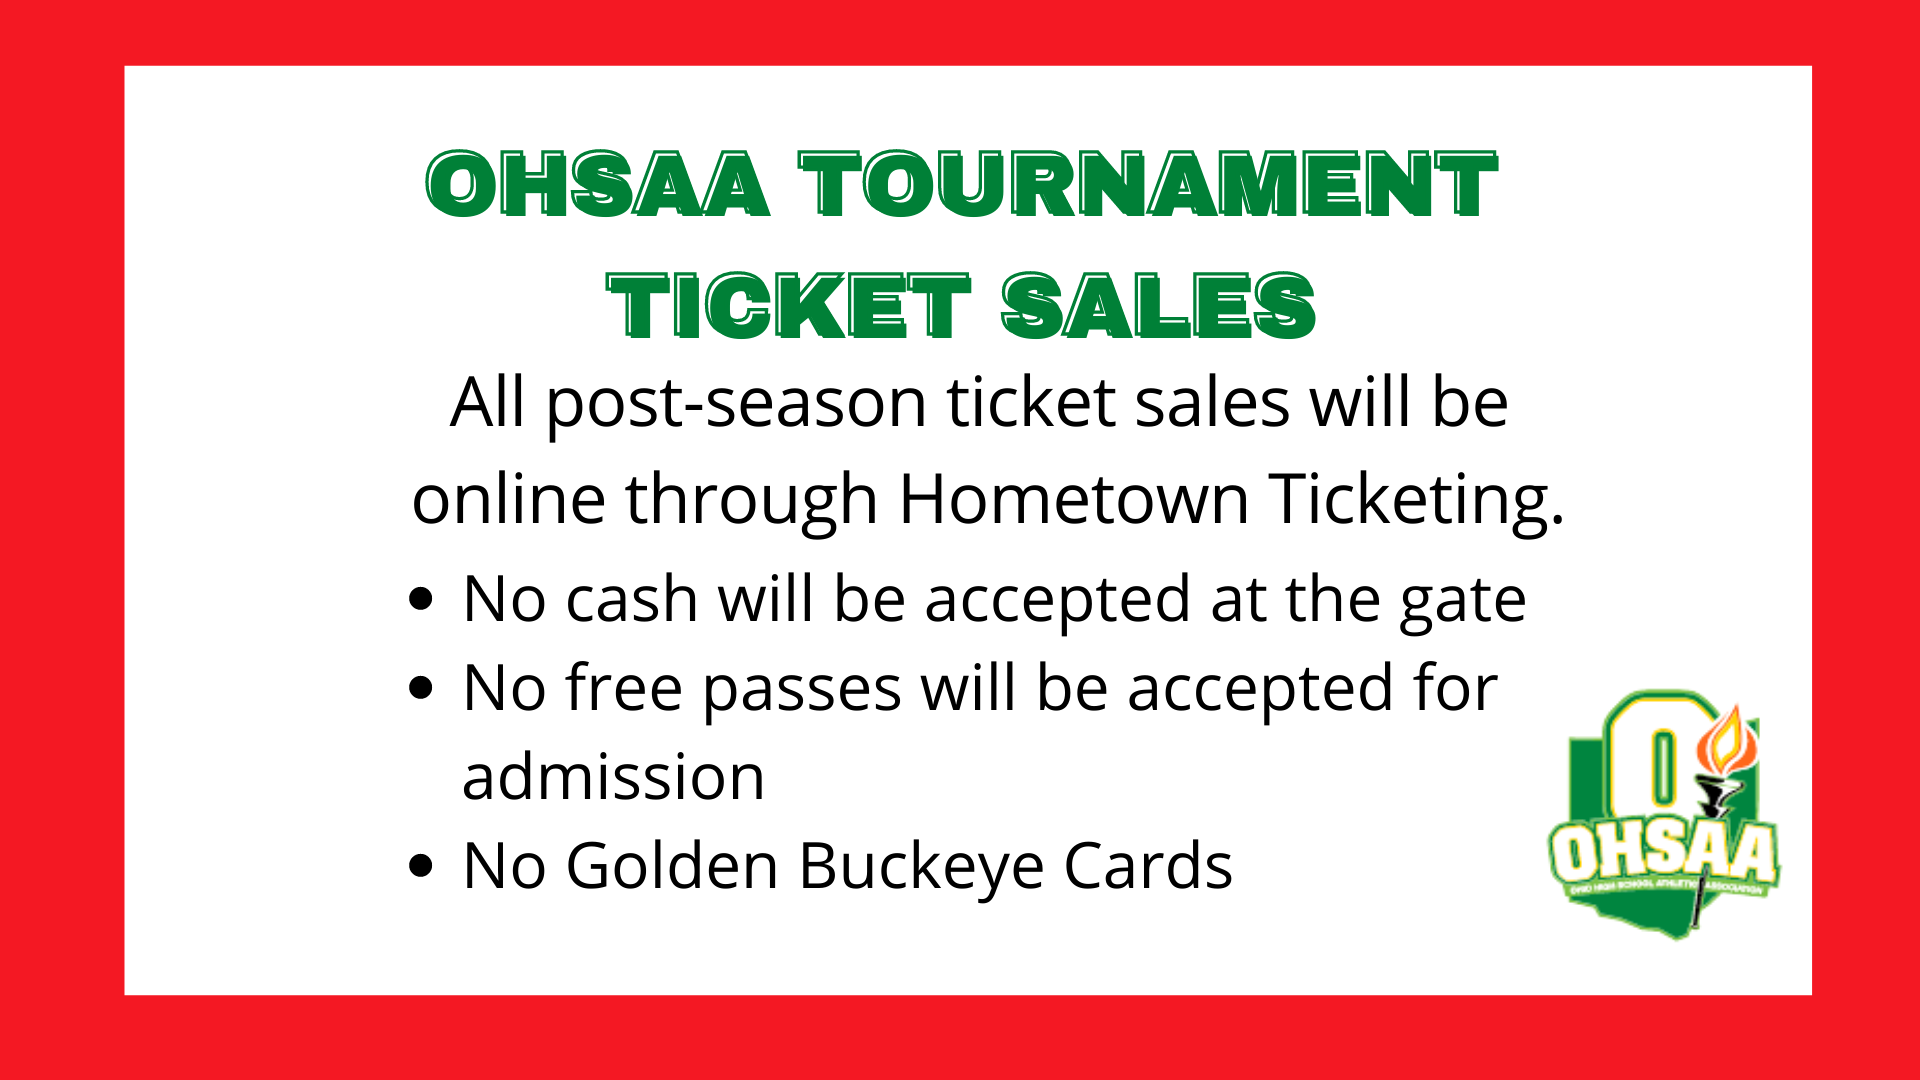 OHSAA Tournament Ticket Sales, No discounts, all sales online